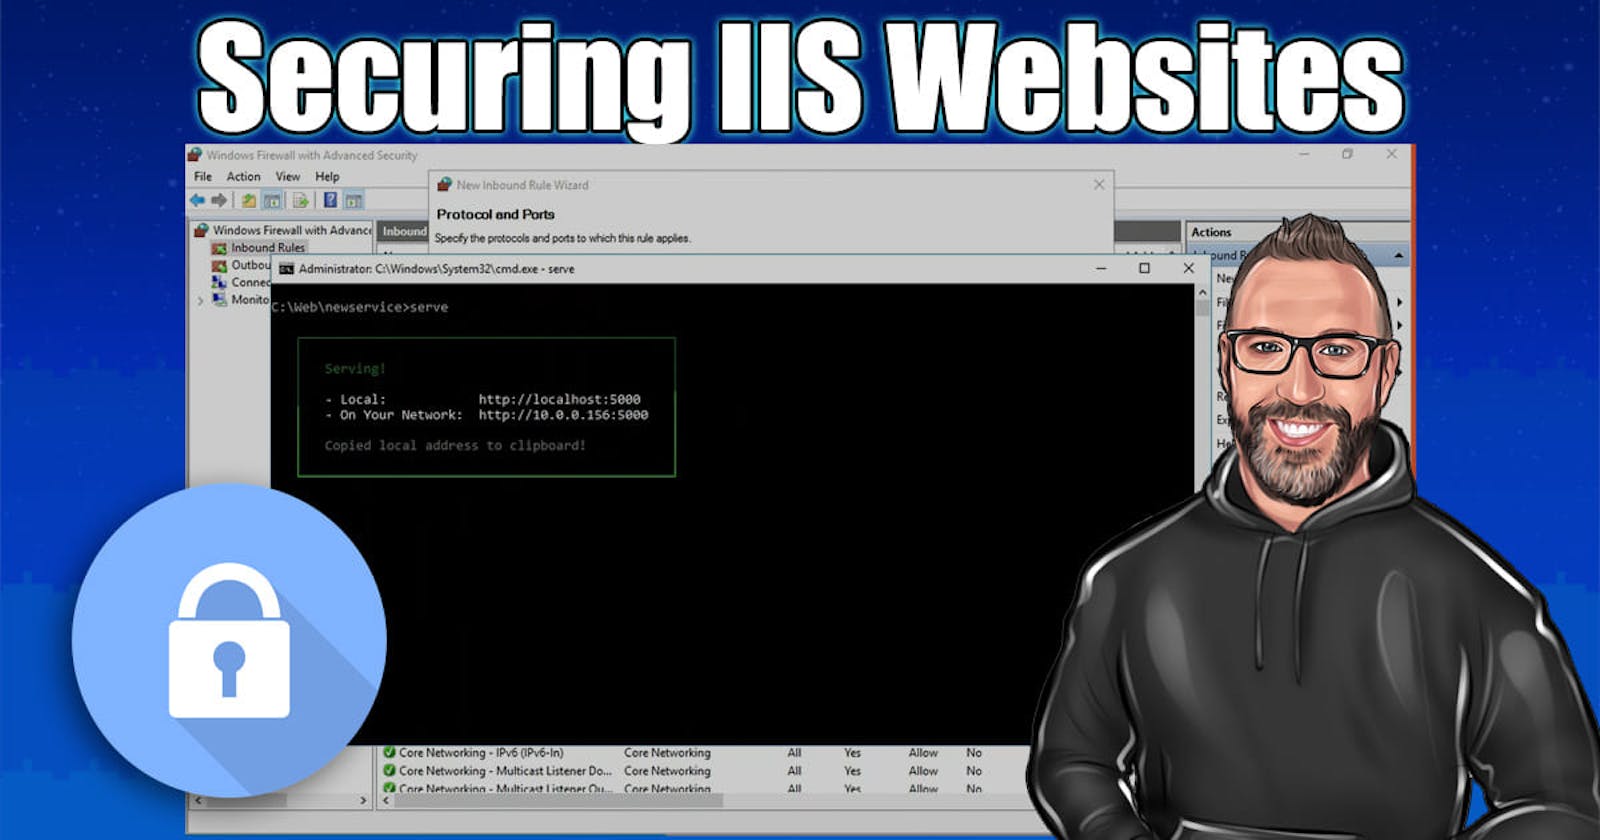 Securing IIS Websites